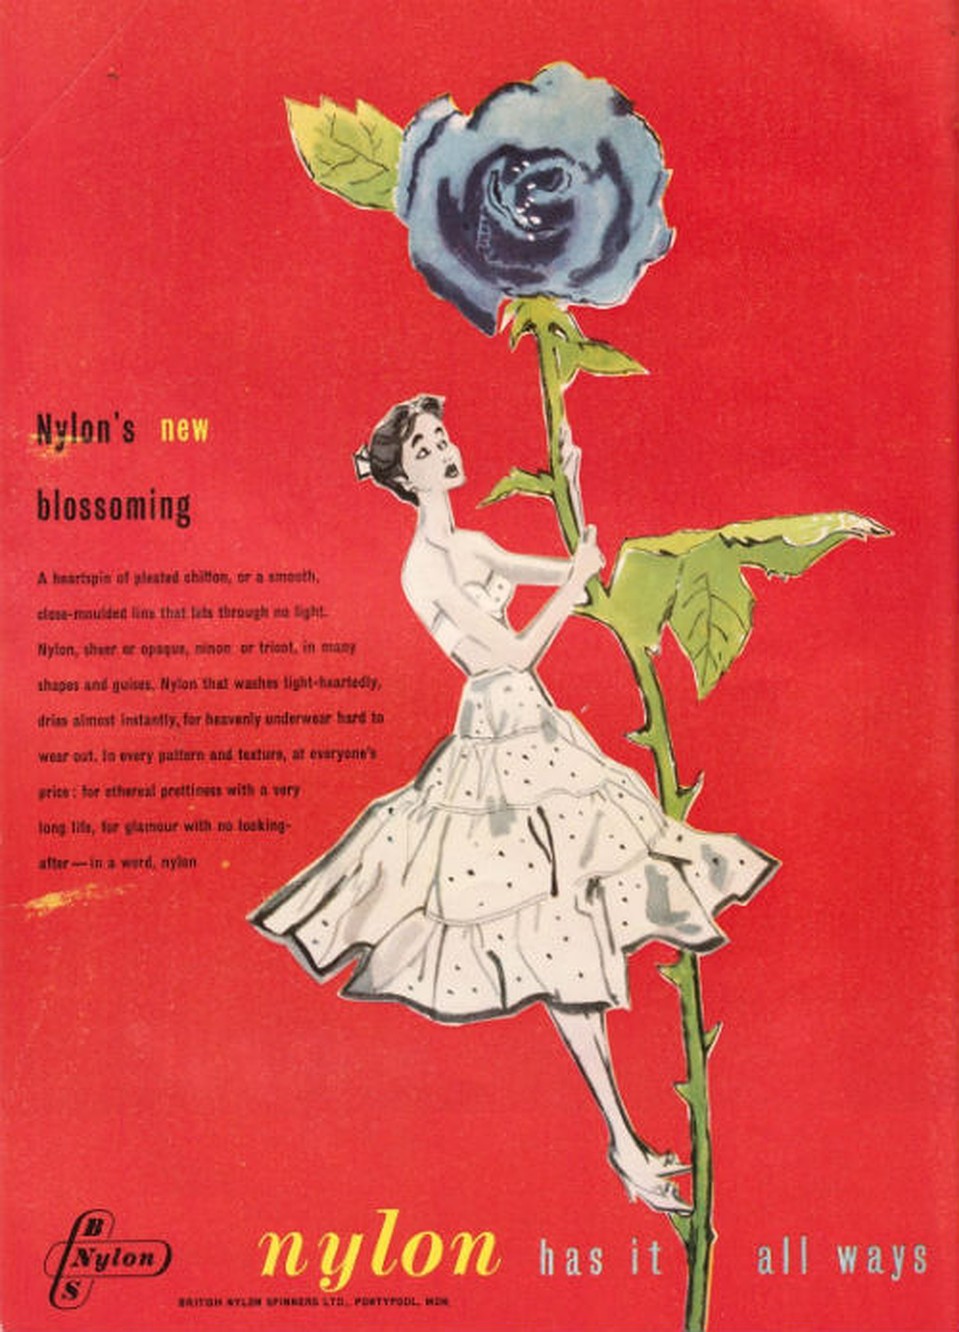 Nylon advert from Vogue, 1955 